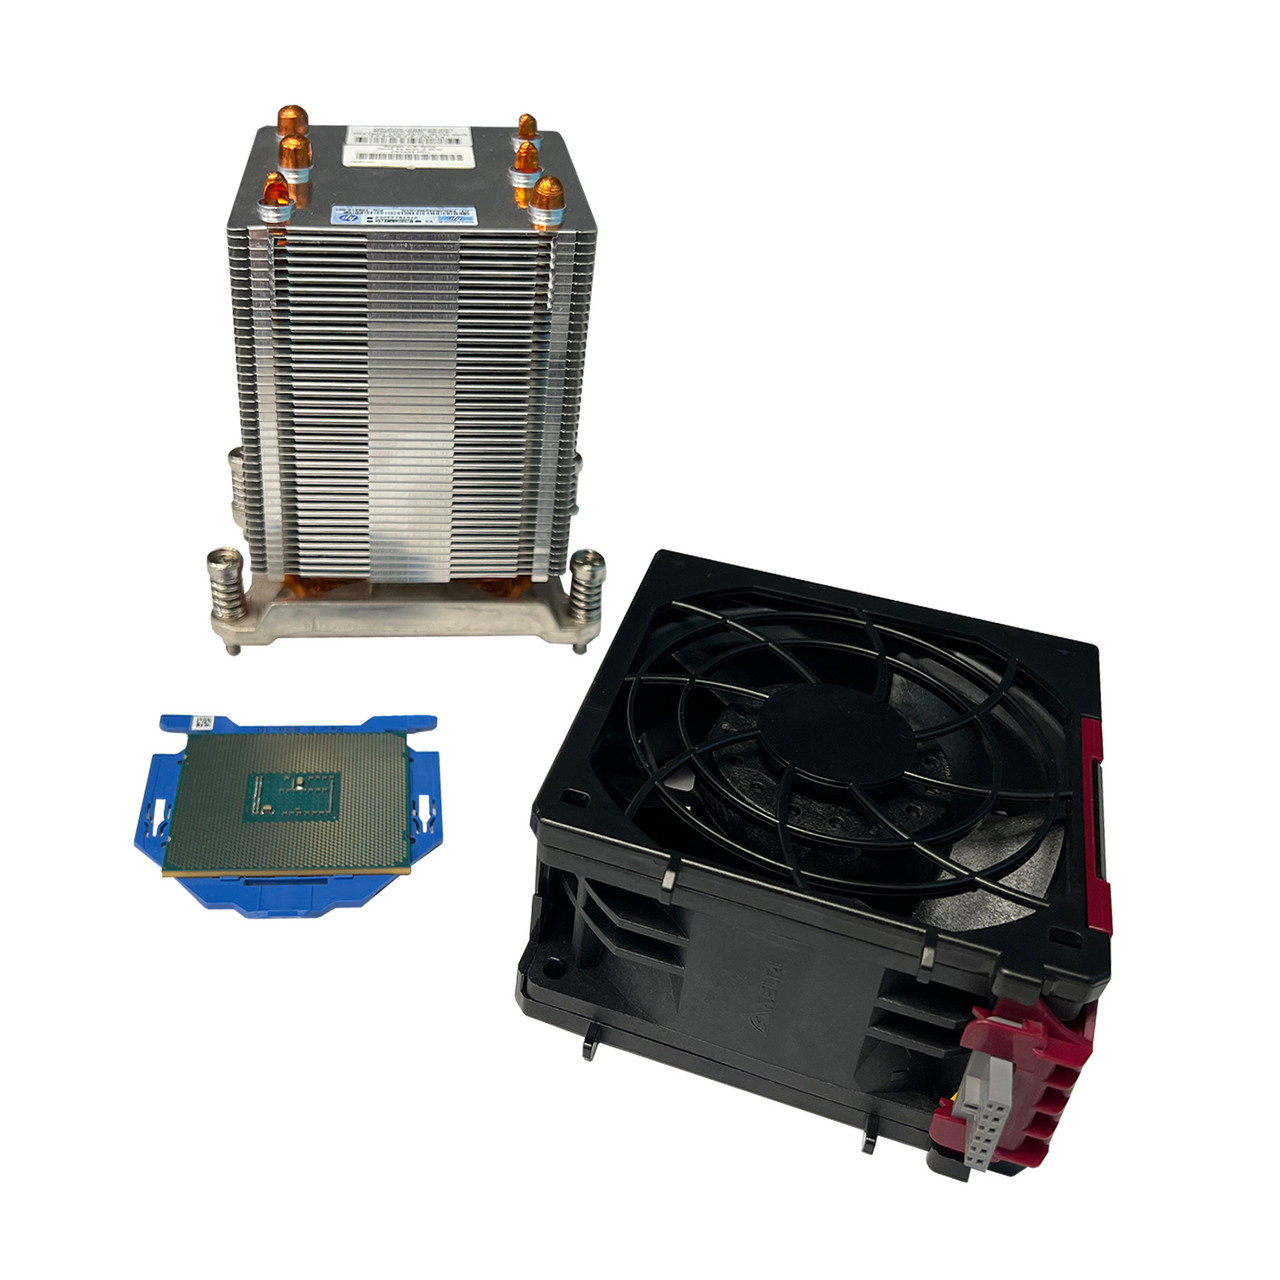 HPE 801230-B21 ML350 Gen9 Xeon E5-2640 V4 10C 2.4Ghz Processor Kit